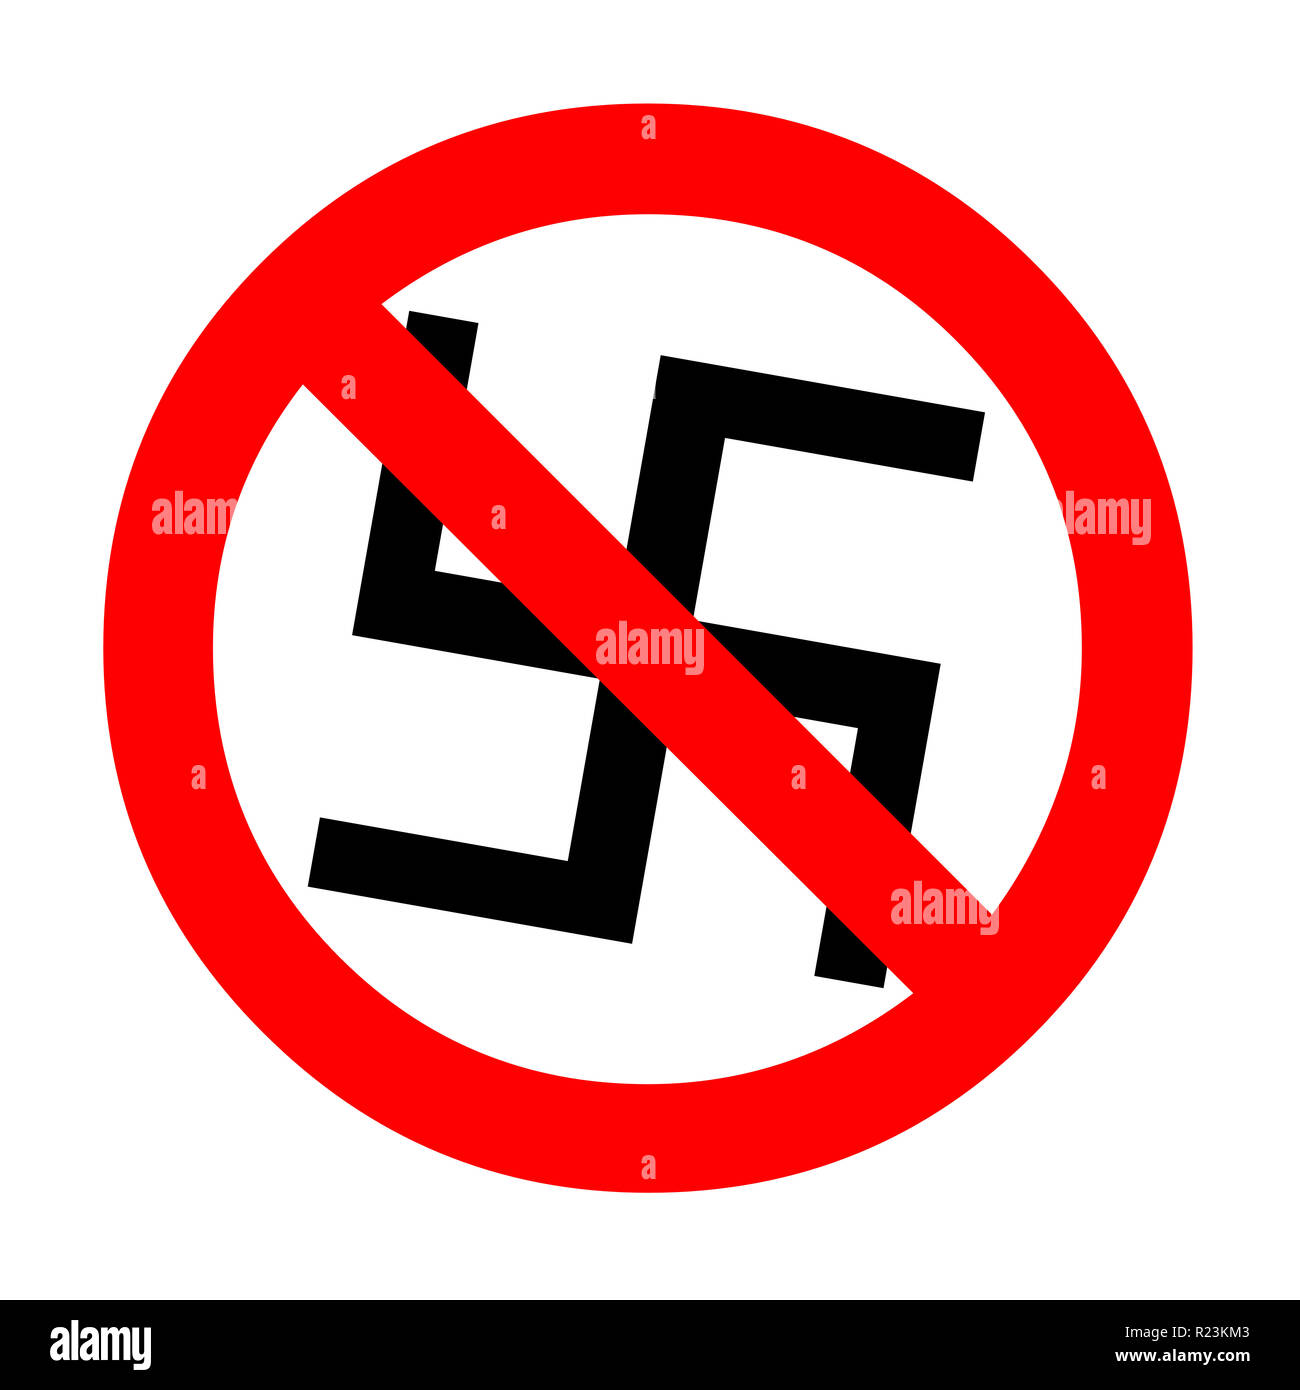 No nazism symbol Stock Photo